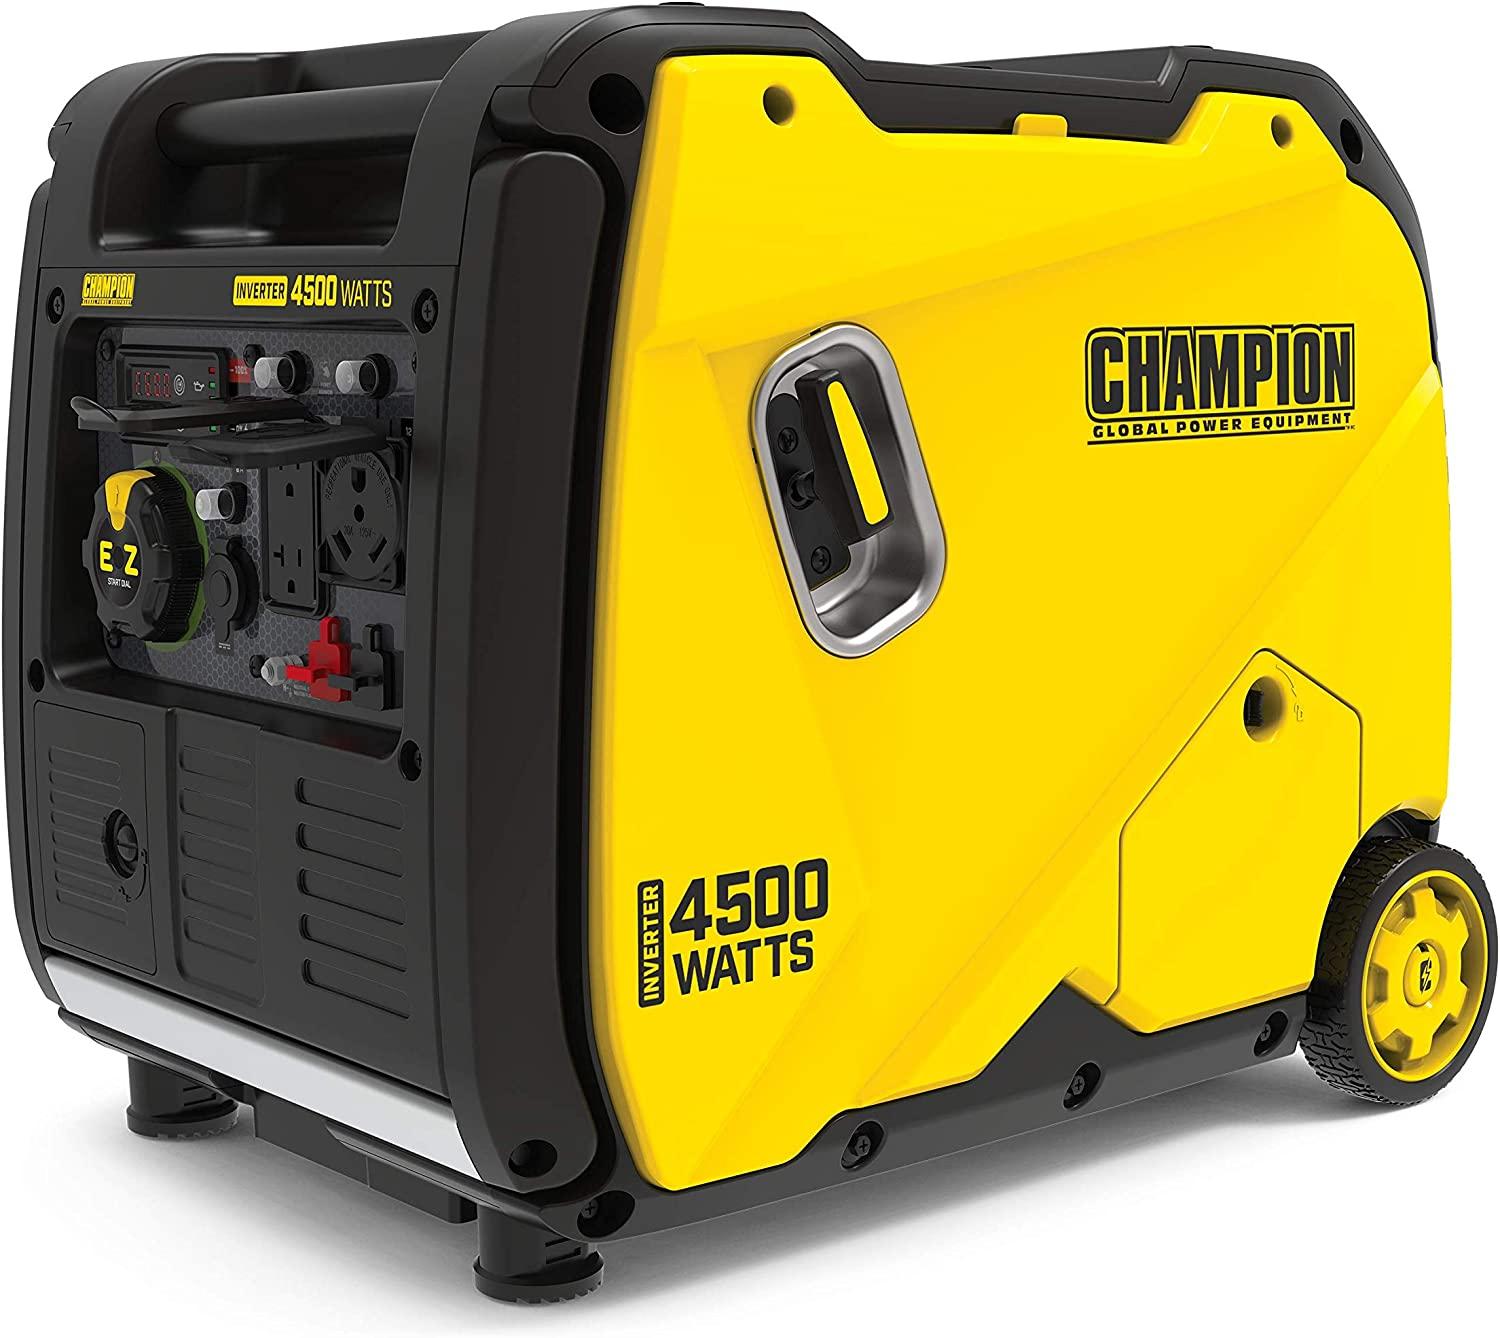 Champion Power Equipment 4500w Portable Inverter Generator for $516.48 Shipped